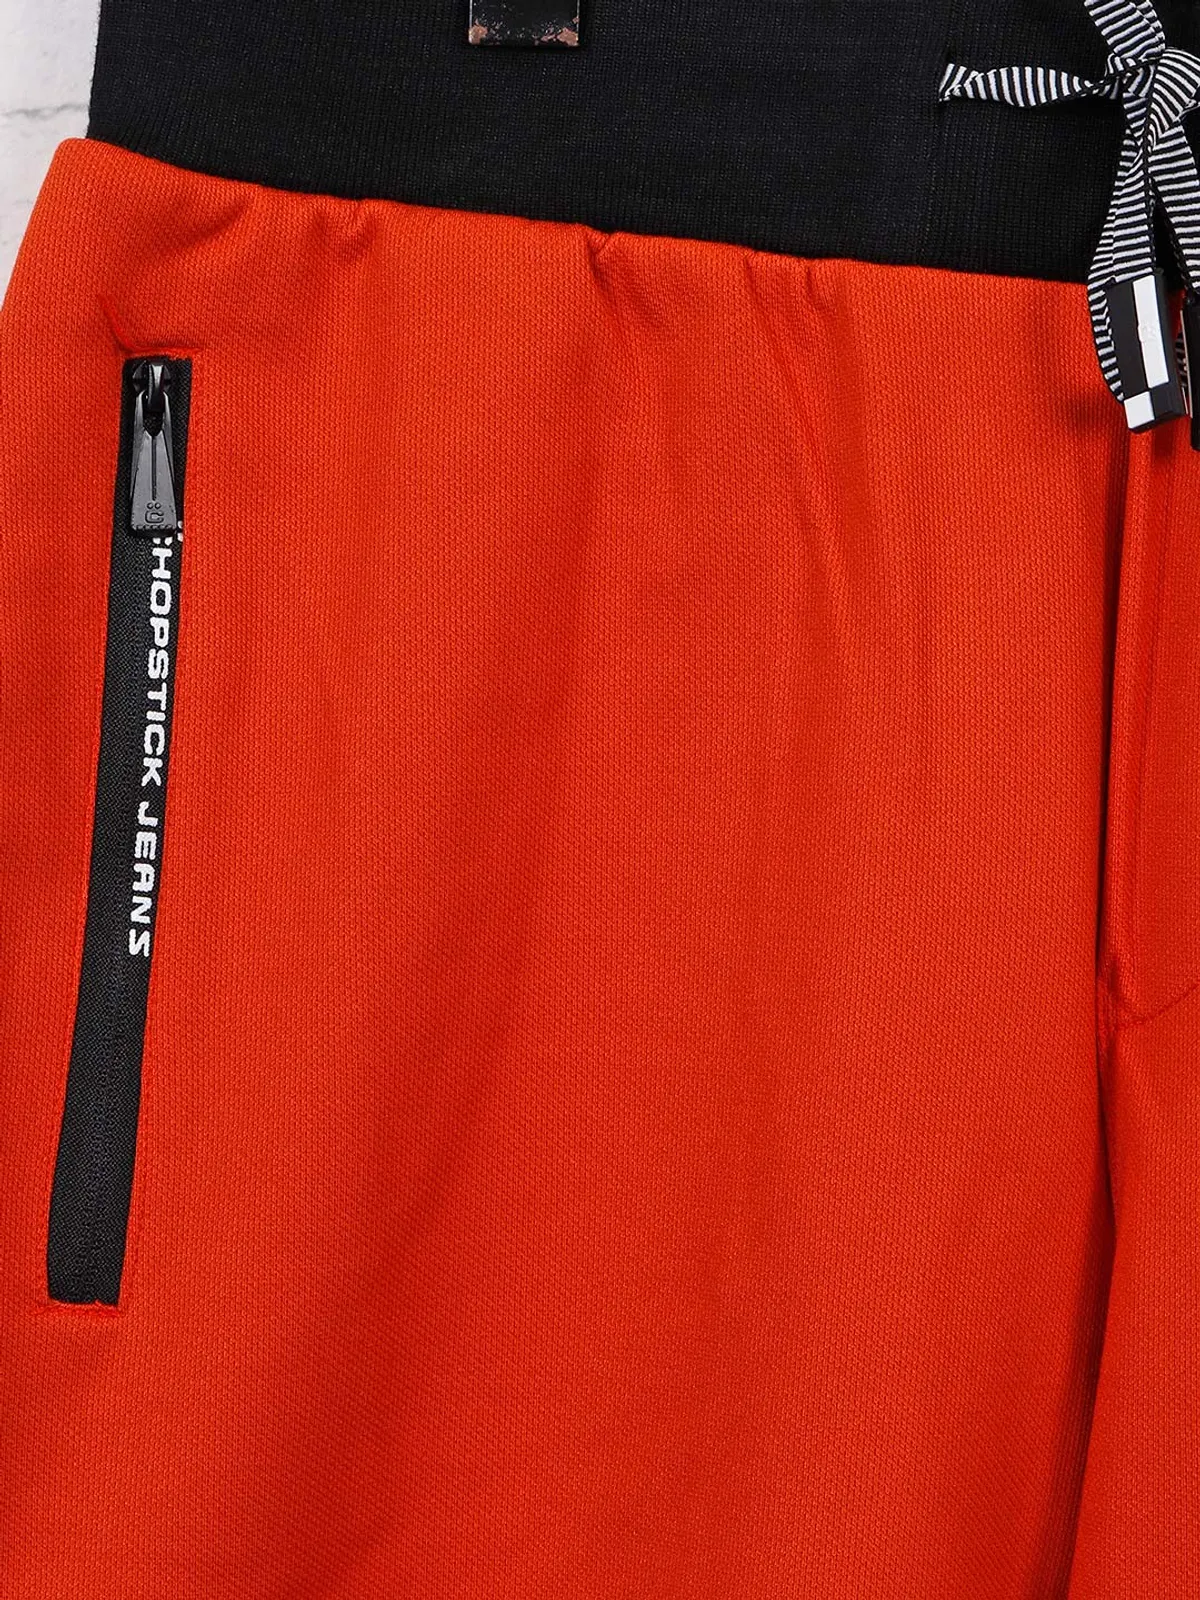 Chopstick solid orange cotton shorts